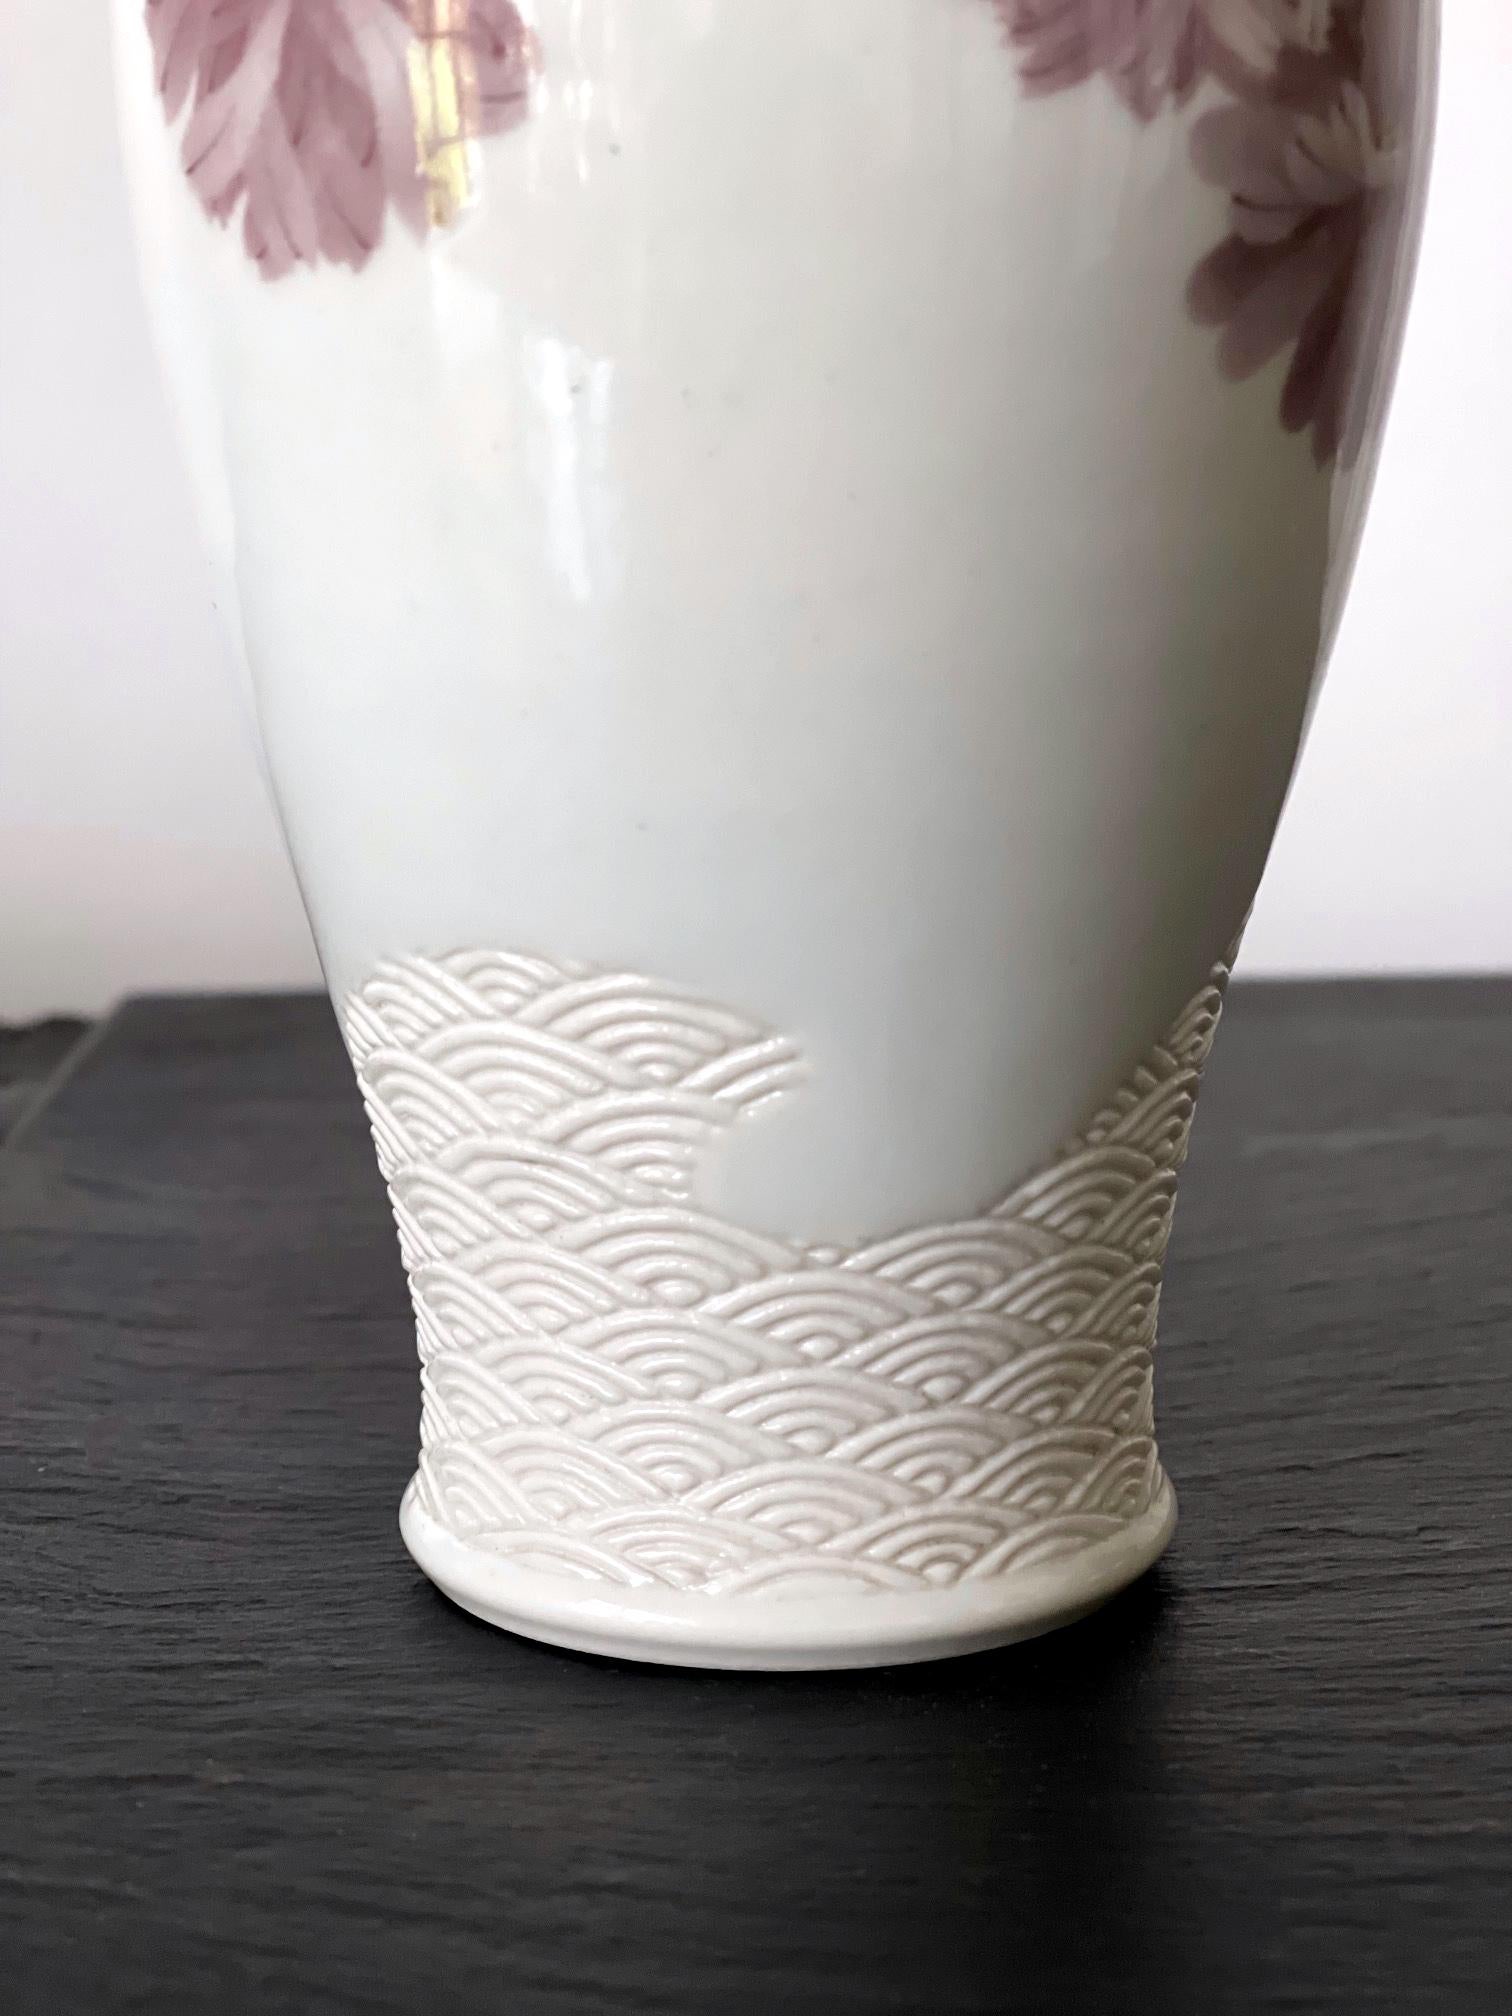 Japanese Ceramic Vase with Delicate Carvings by Makuzu Kozan Meiji Period For Sale 5